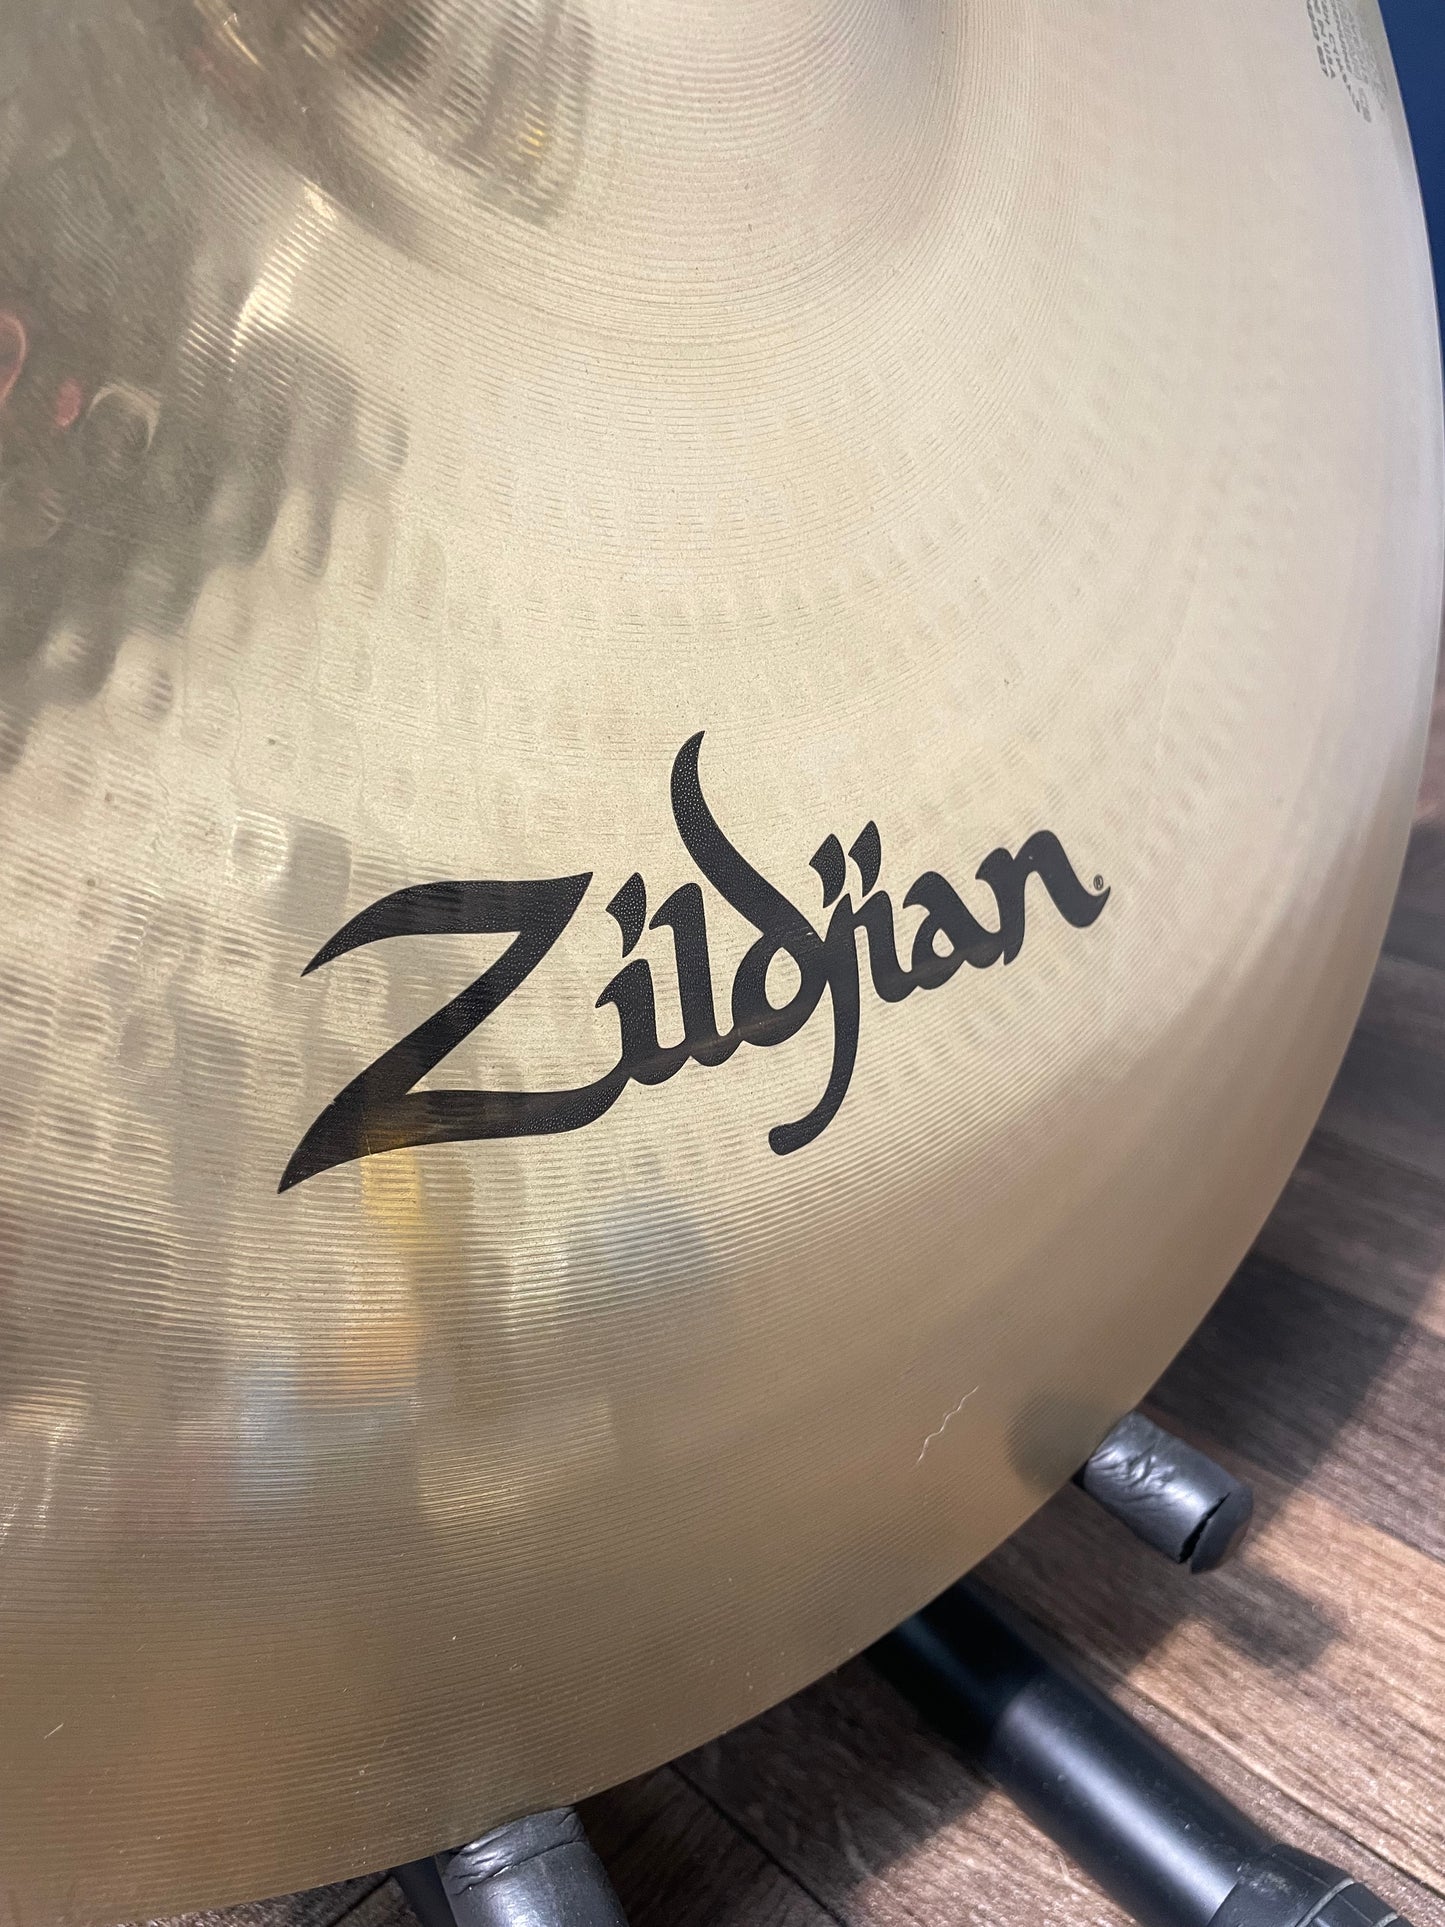 Zildjian A Custom Medium Ride Cymbal 20”/51cm / Drum Accessory #LC5